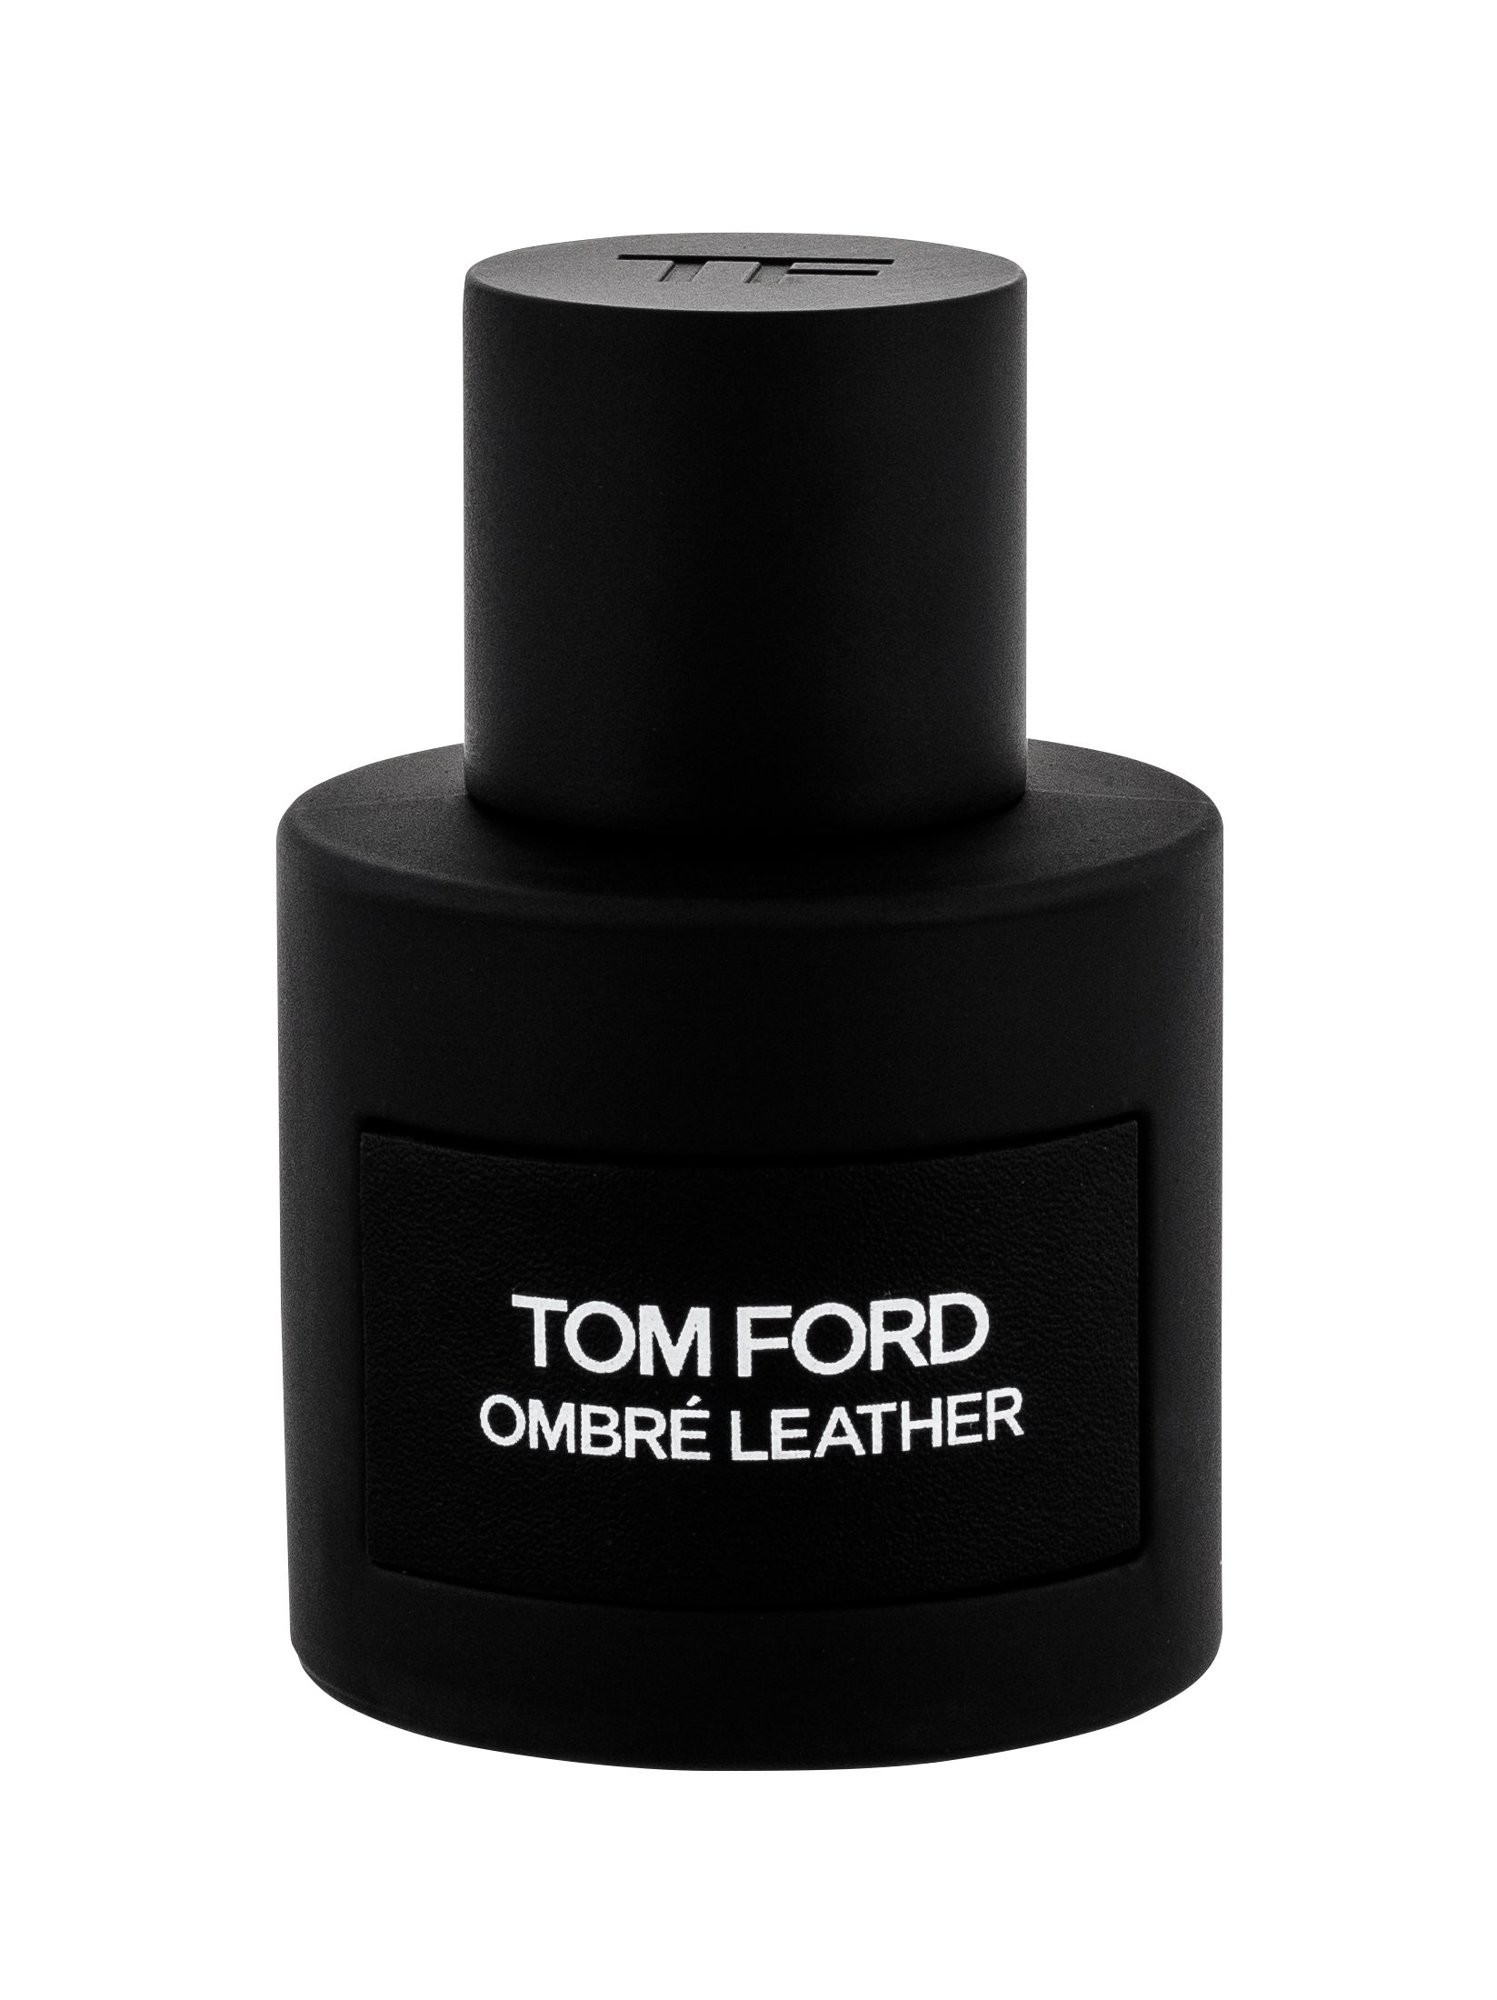 TOM FORD Ombré Leather, EDP 50ml